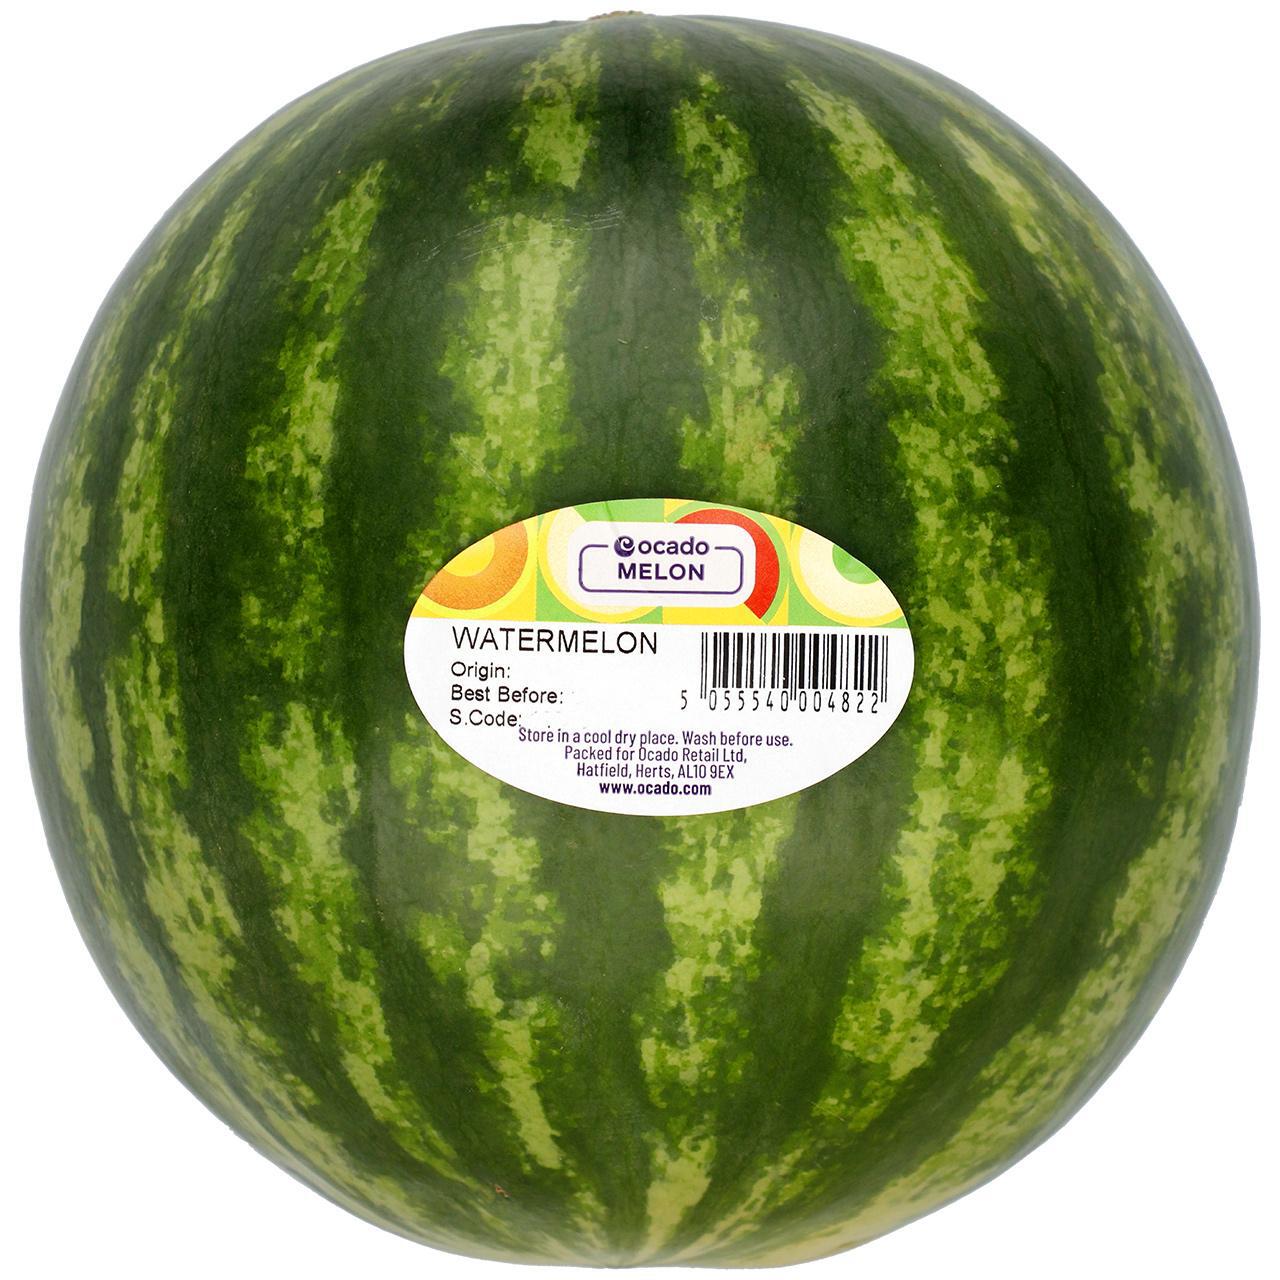 Ocado Watermelon 2kg